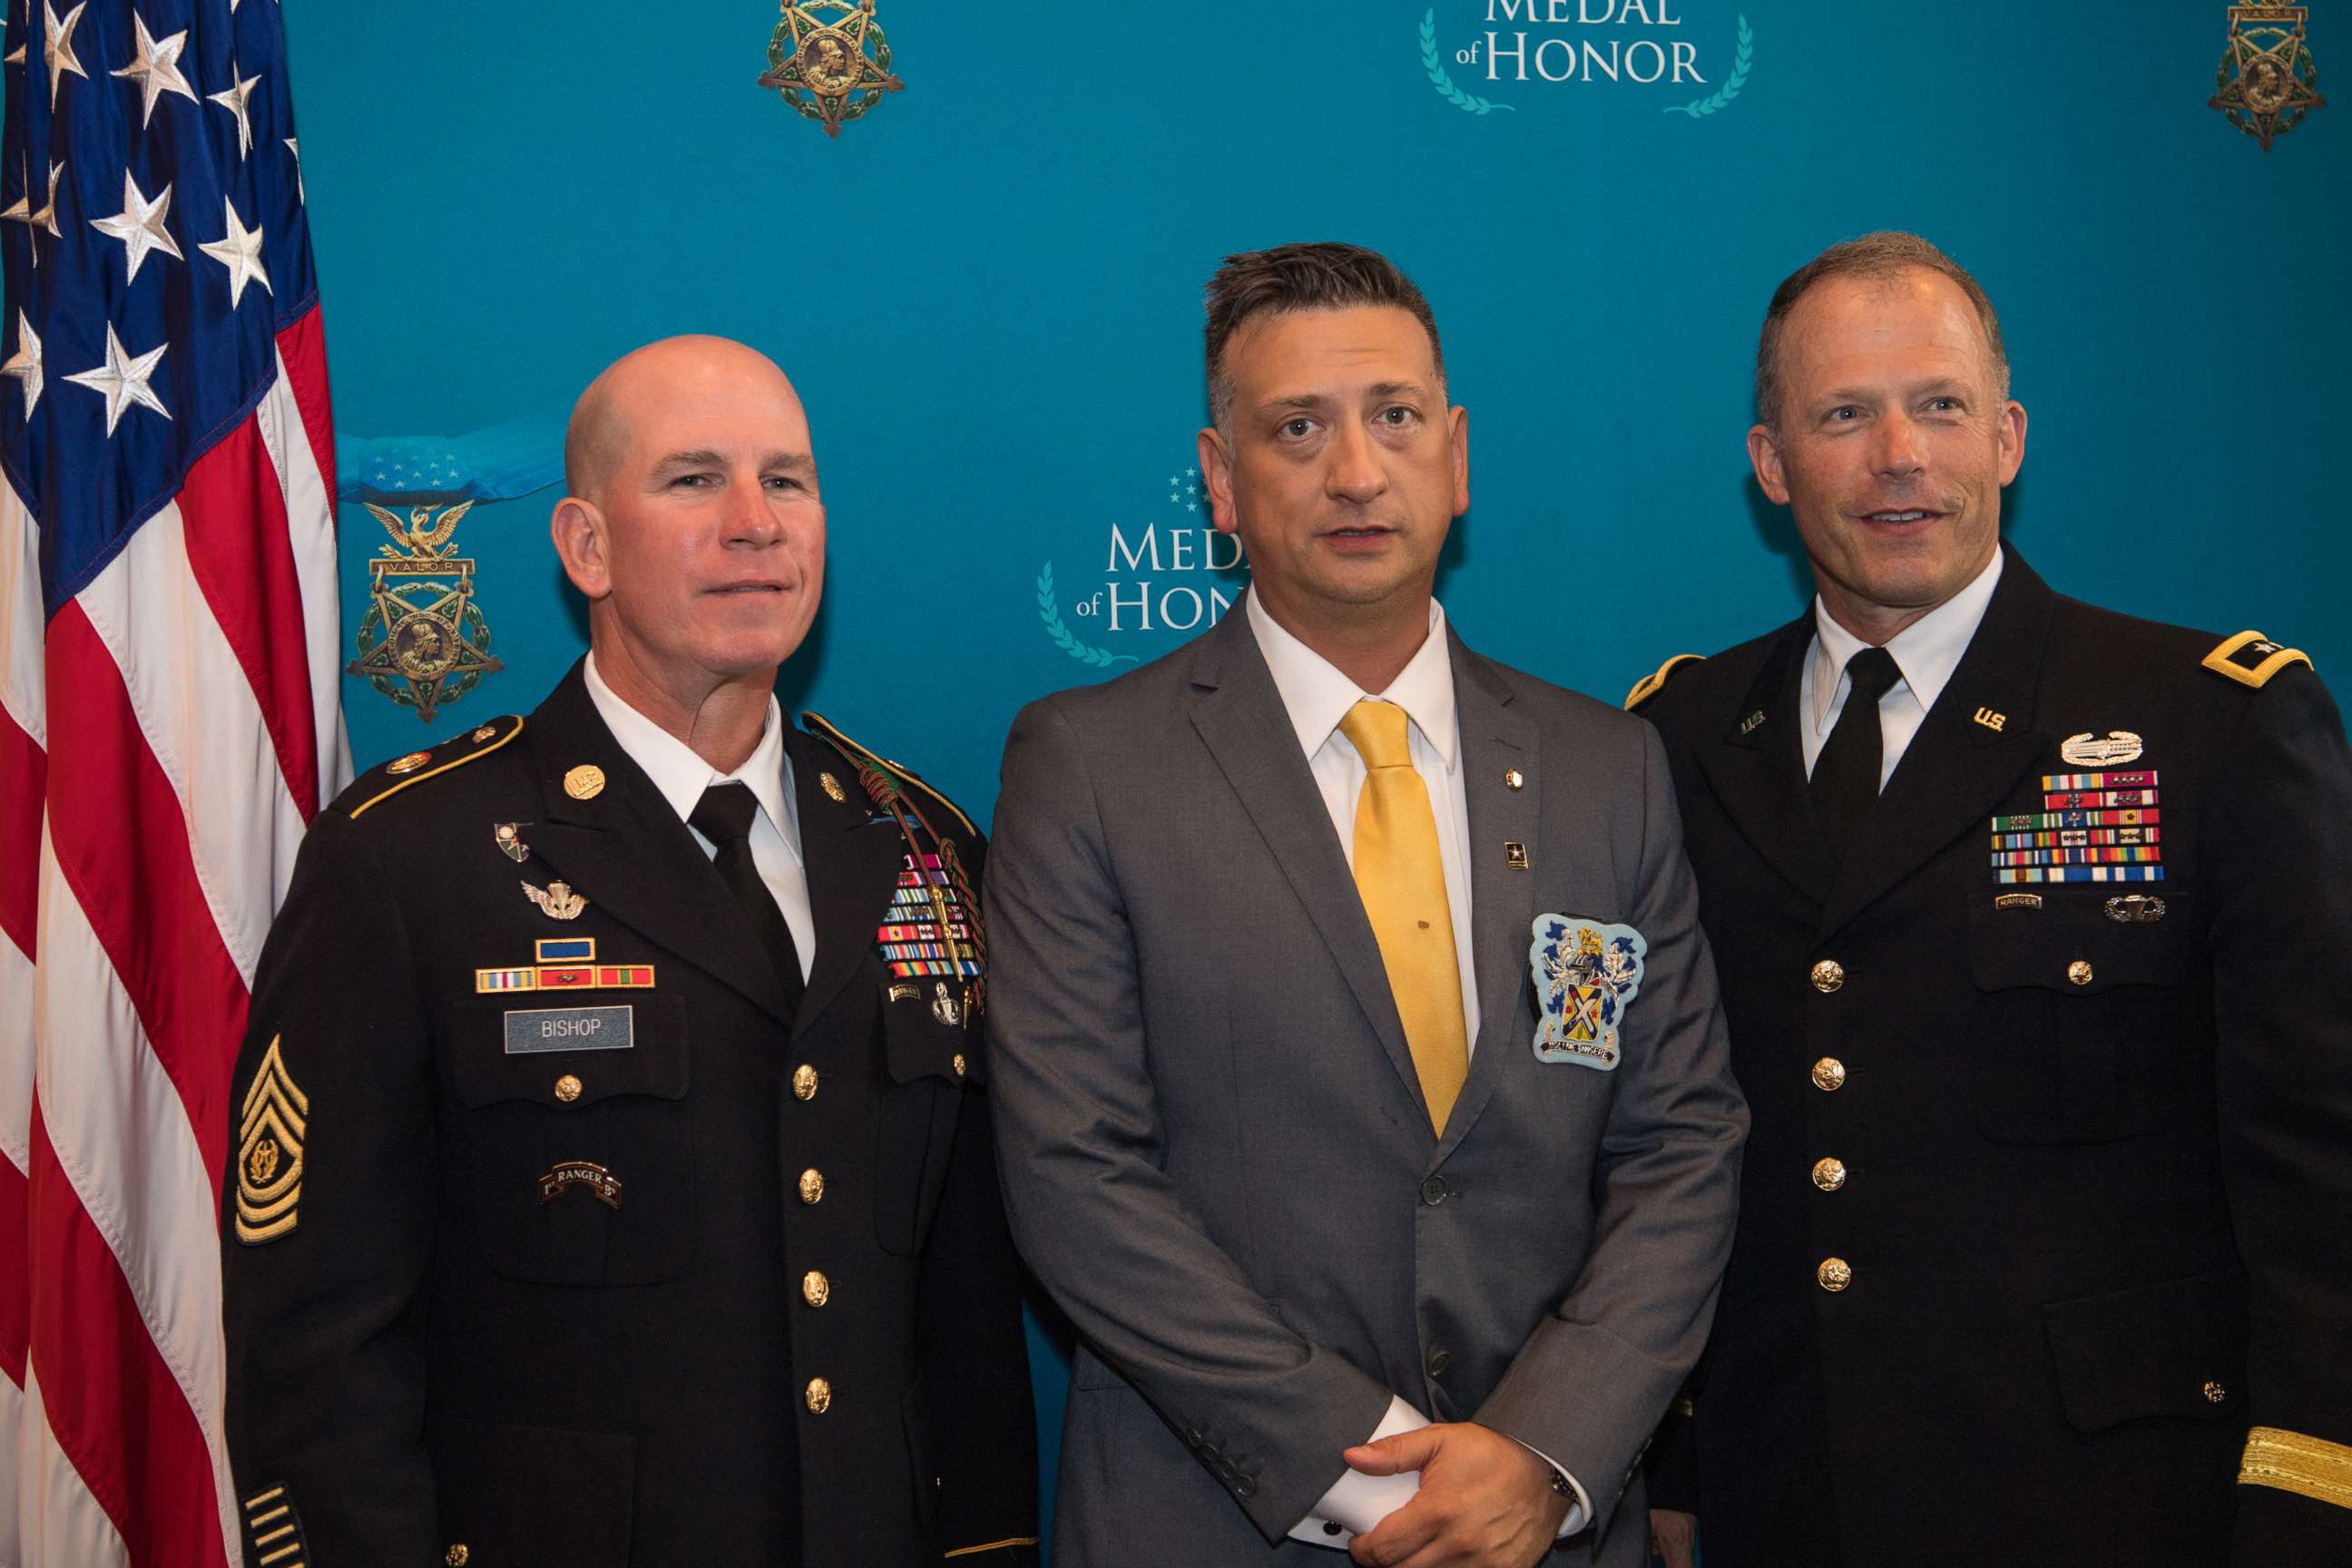 PHOTO: Former U.S. Army Staff Sgt. David G. Bellavia, center, attends a Medal of Honor reception at the Sheraton Pentagon City Hotel, Arlington, Va., June 24, 2019.